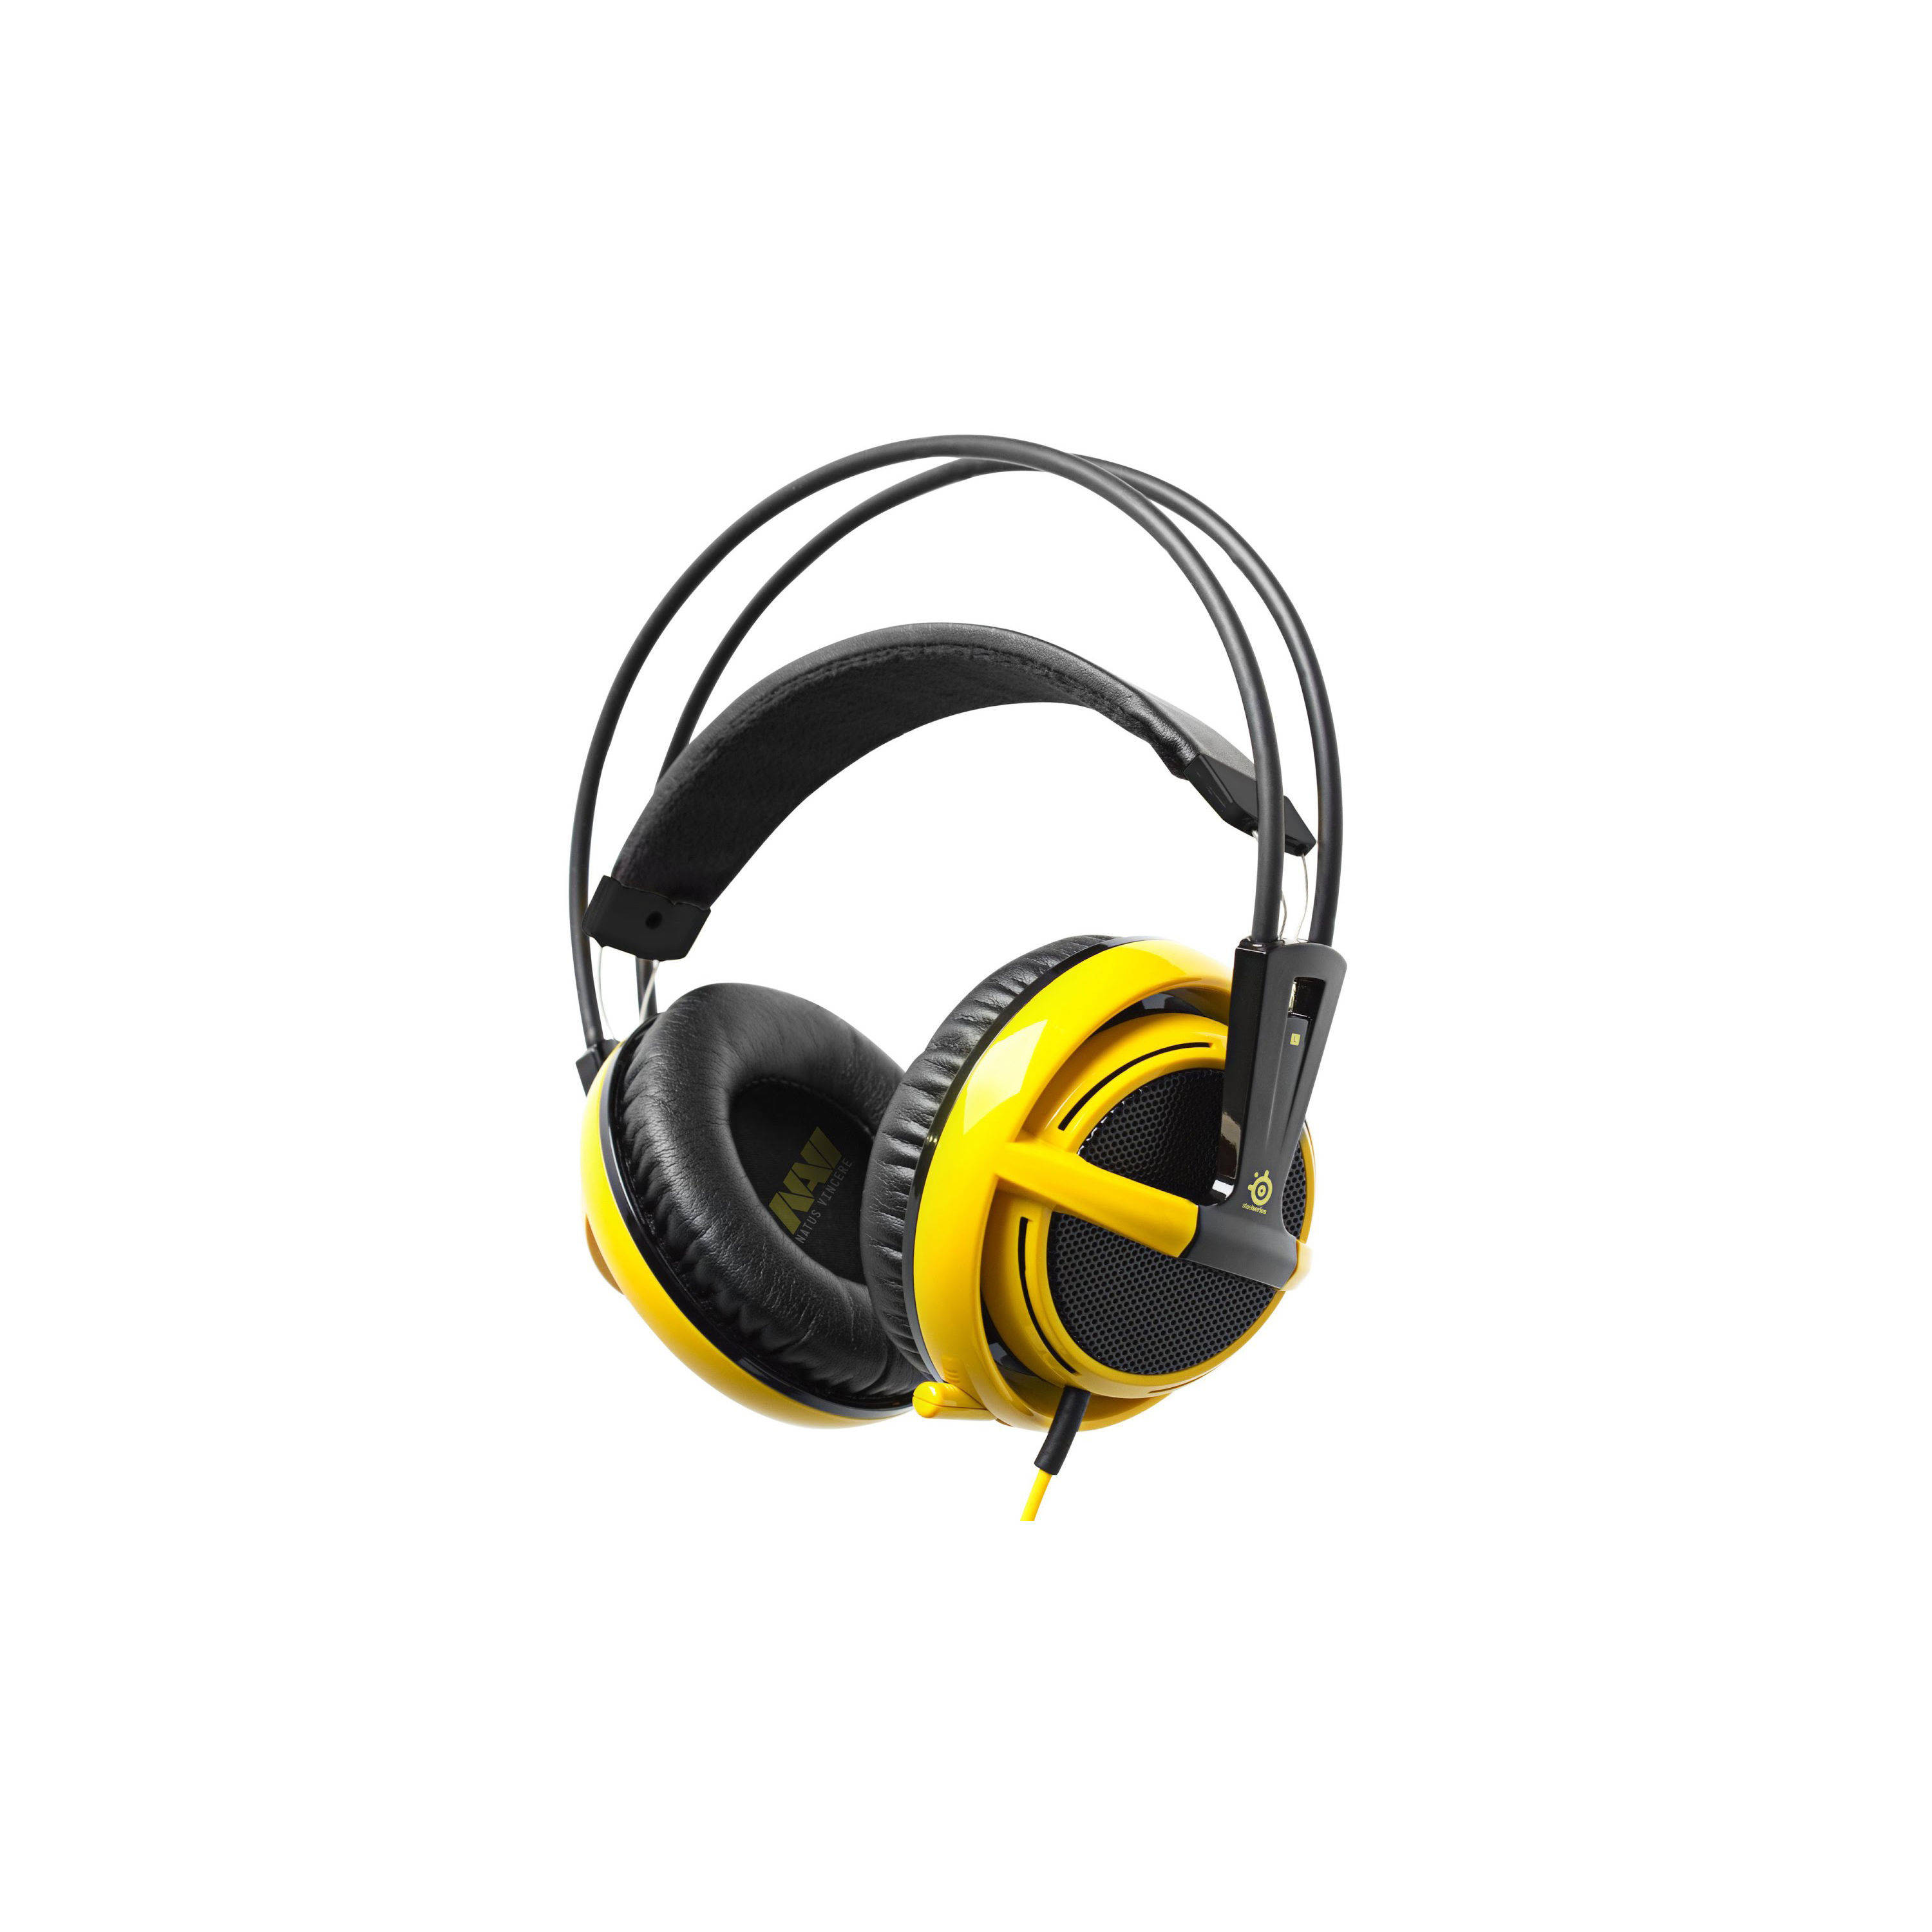 SteelSeries Siberia v2 Gaming Headset - Yellow/Black ...